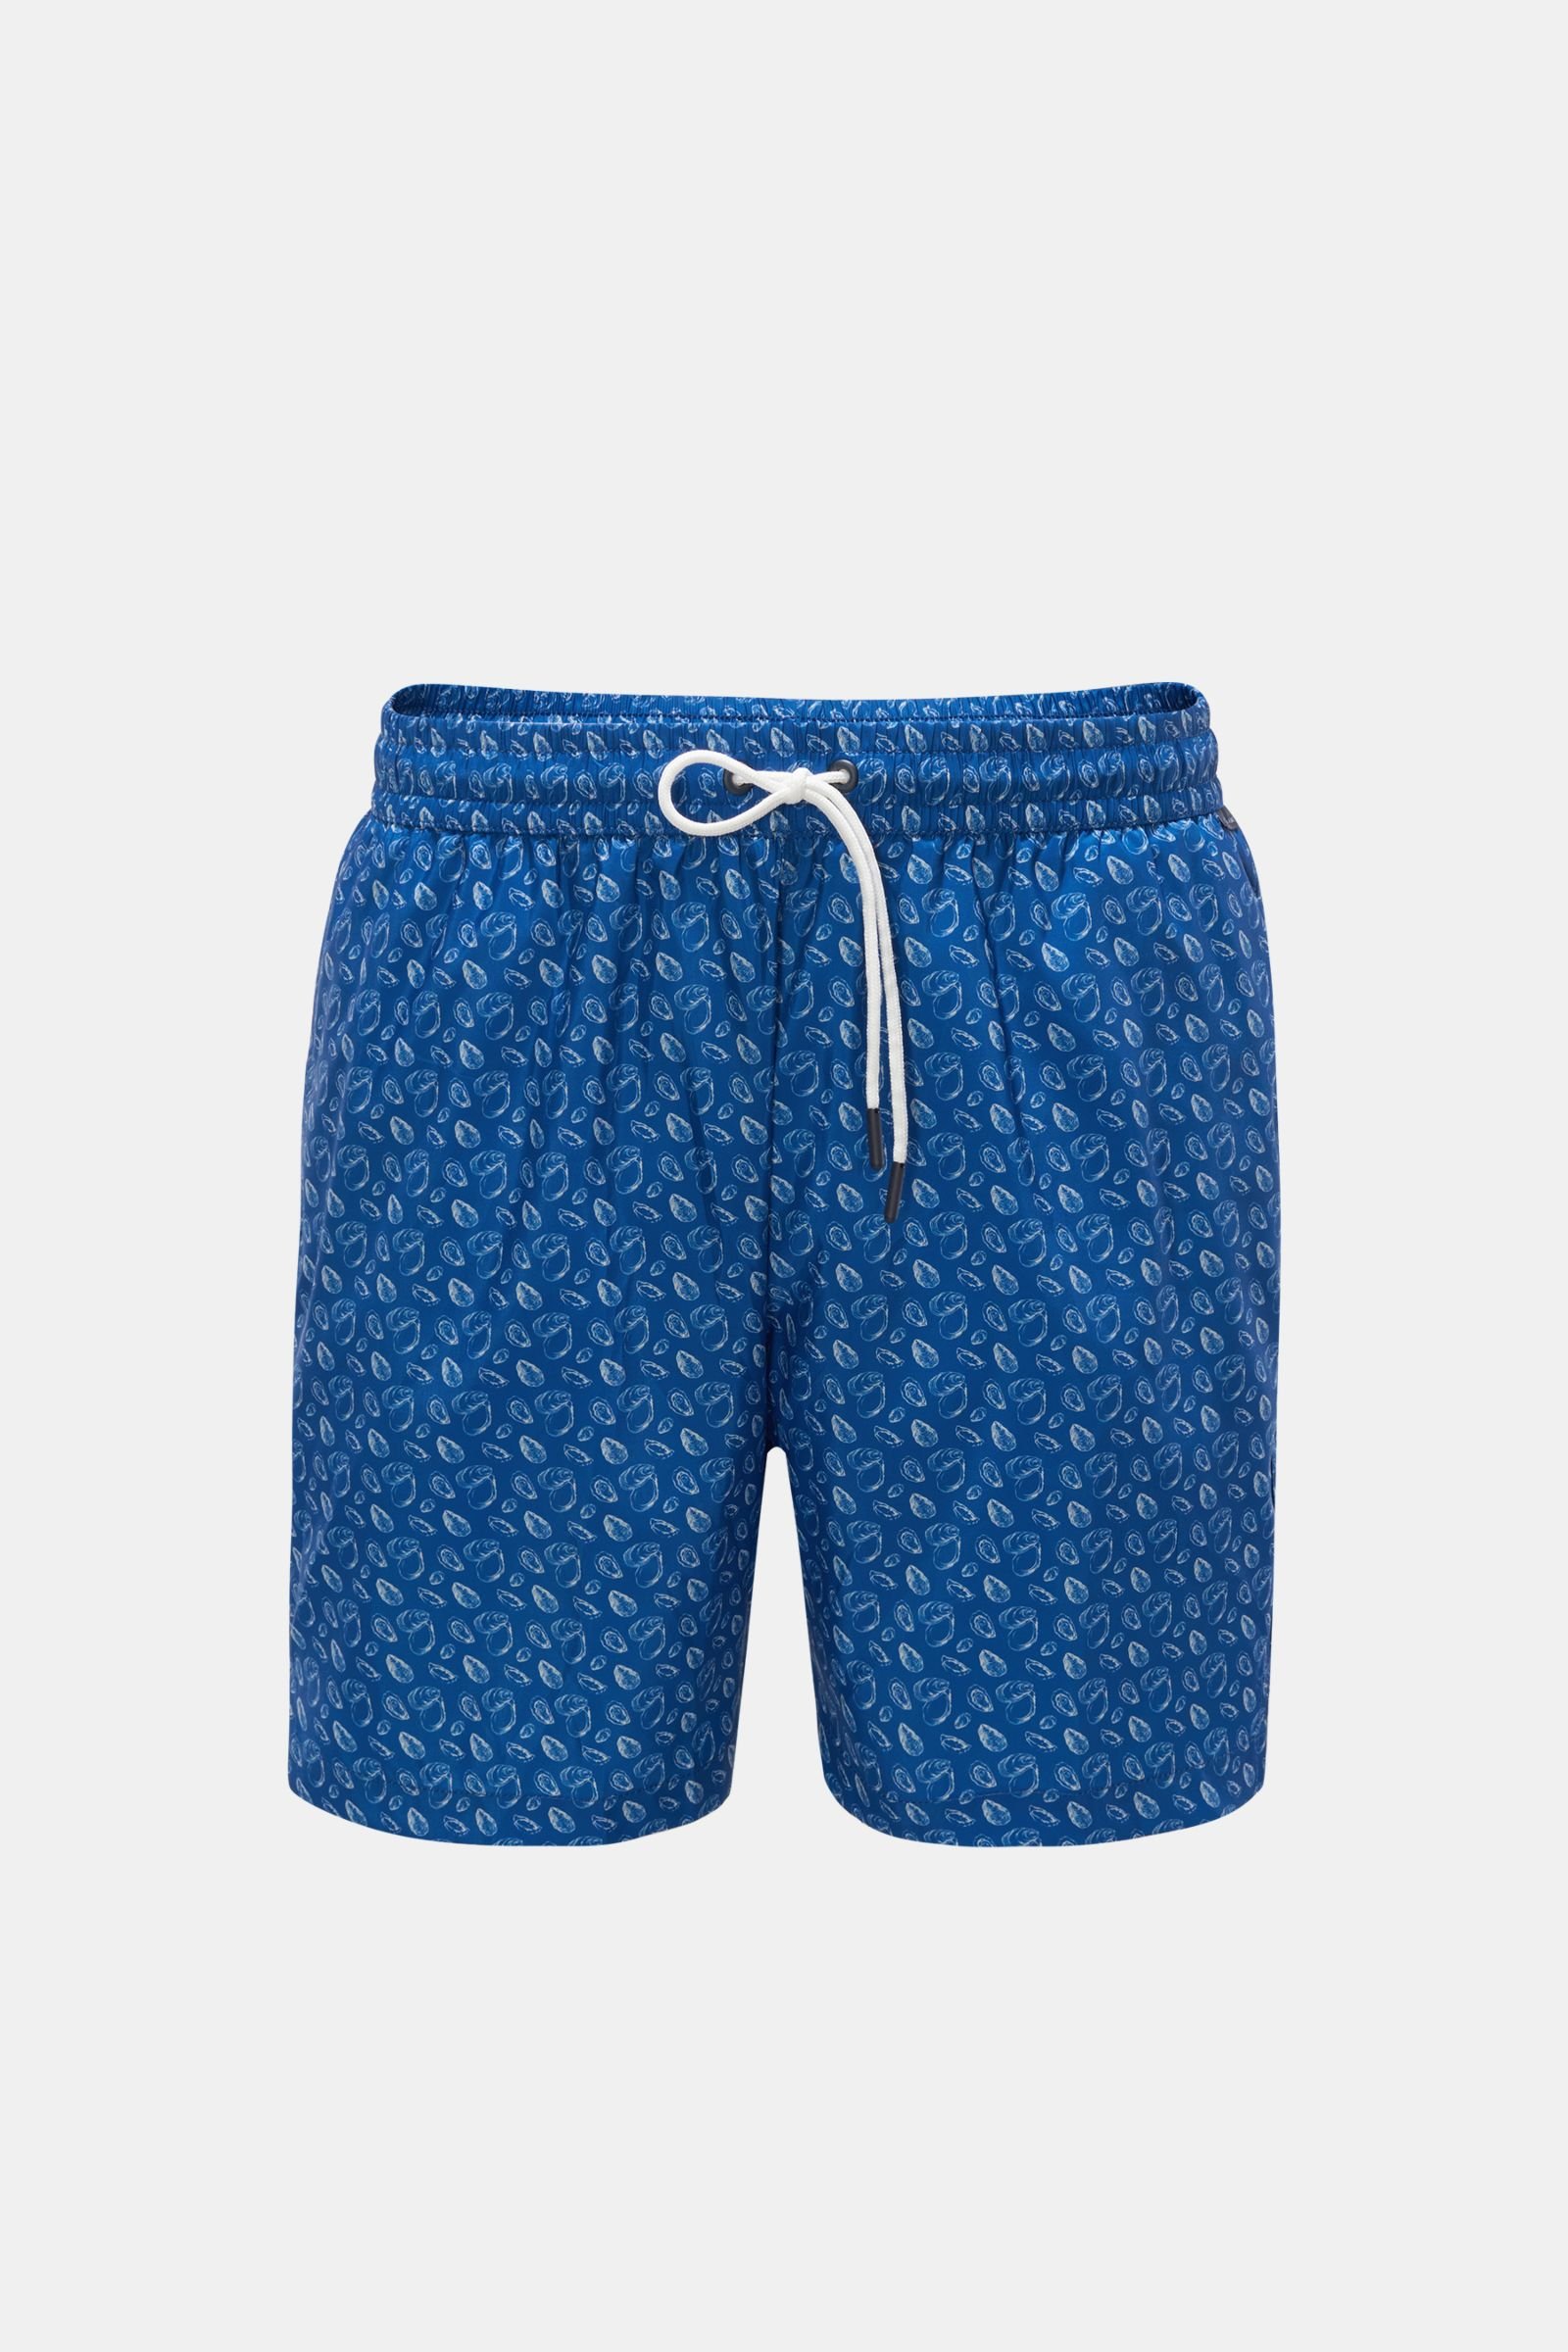 Swim shorts 'Oyster Swim' dark blue/white patterned